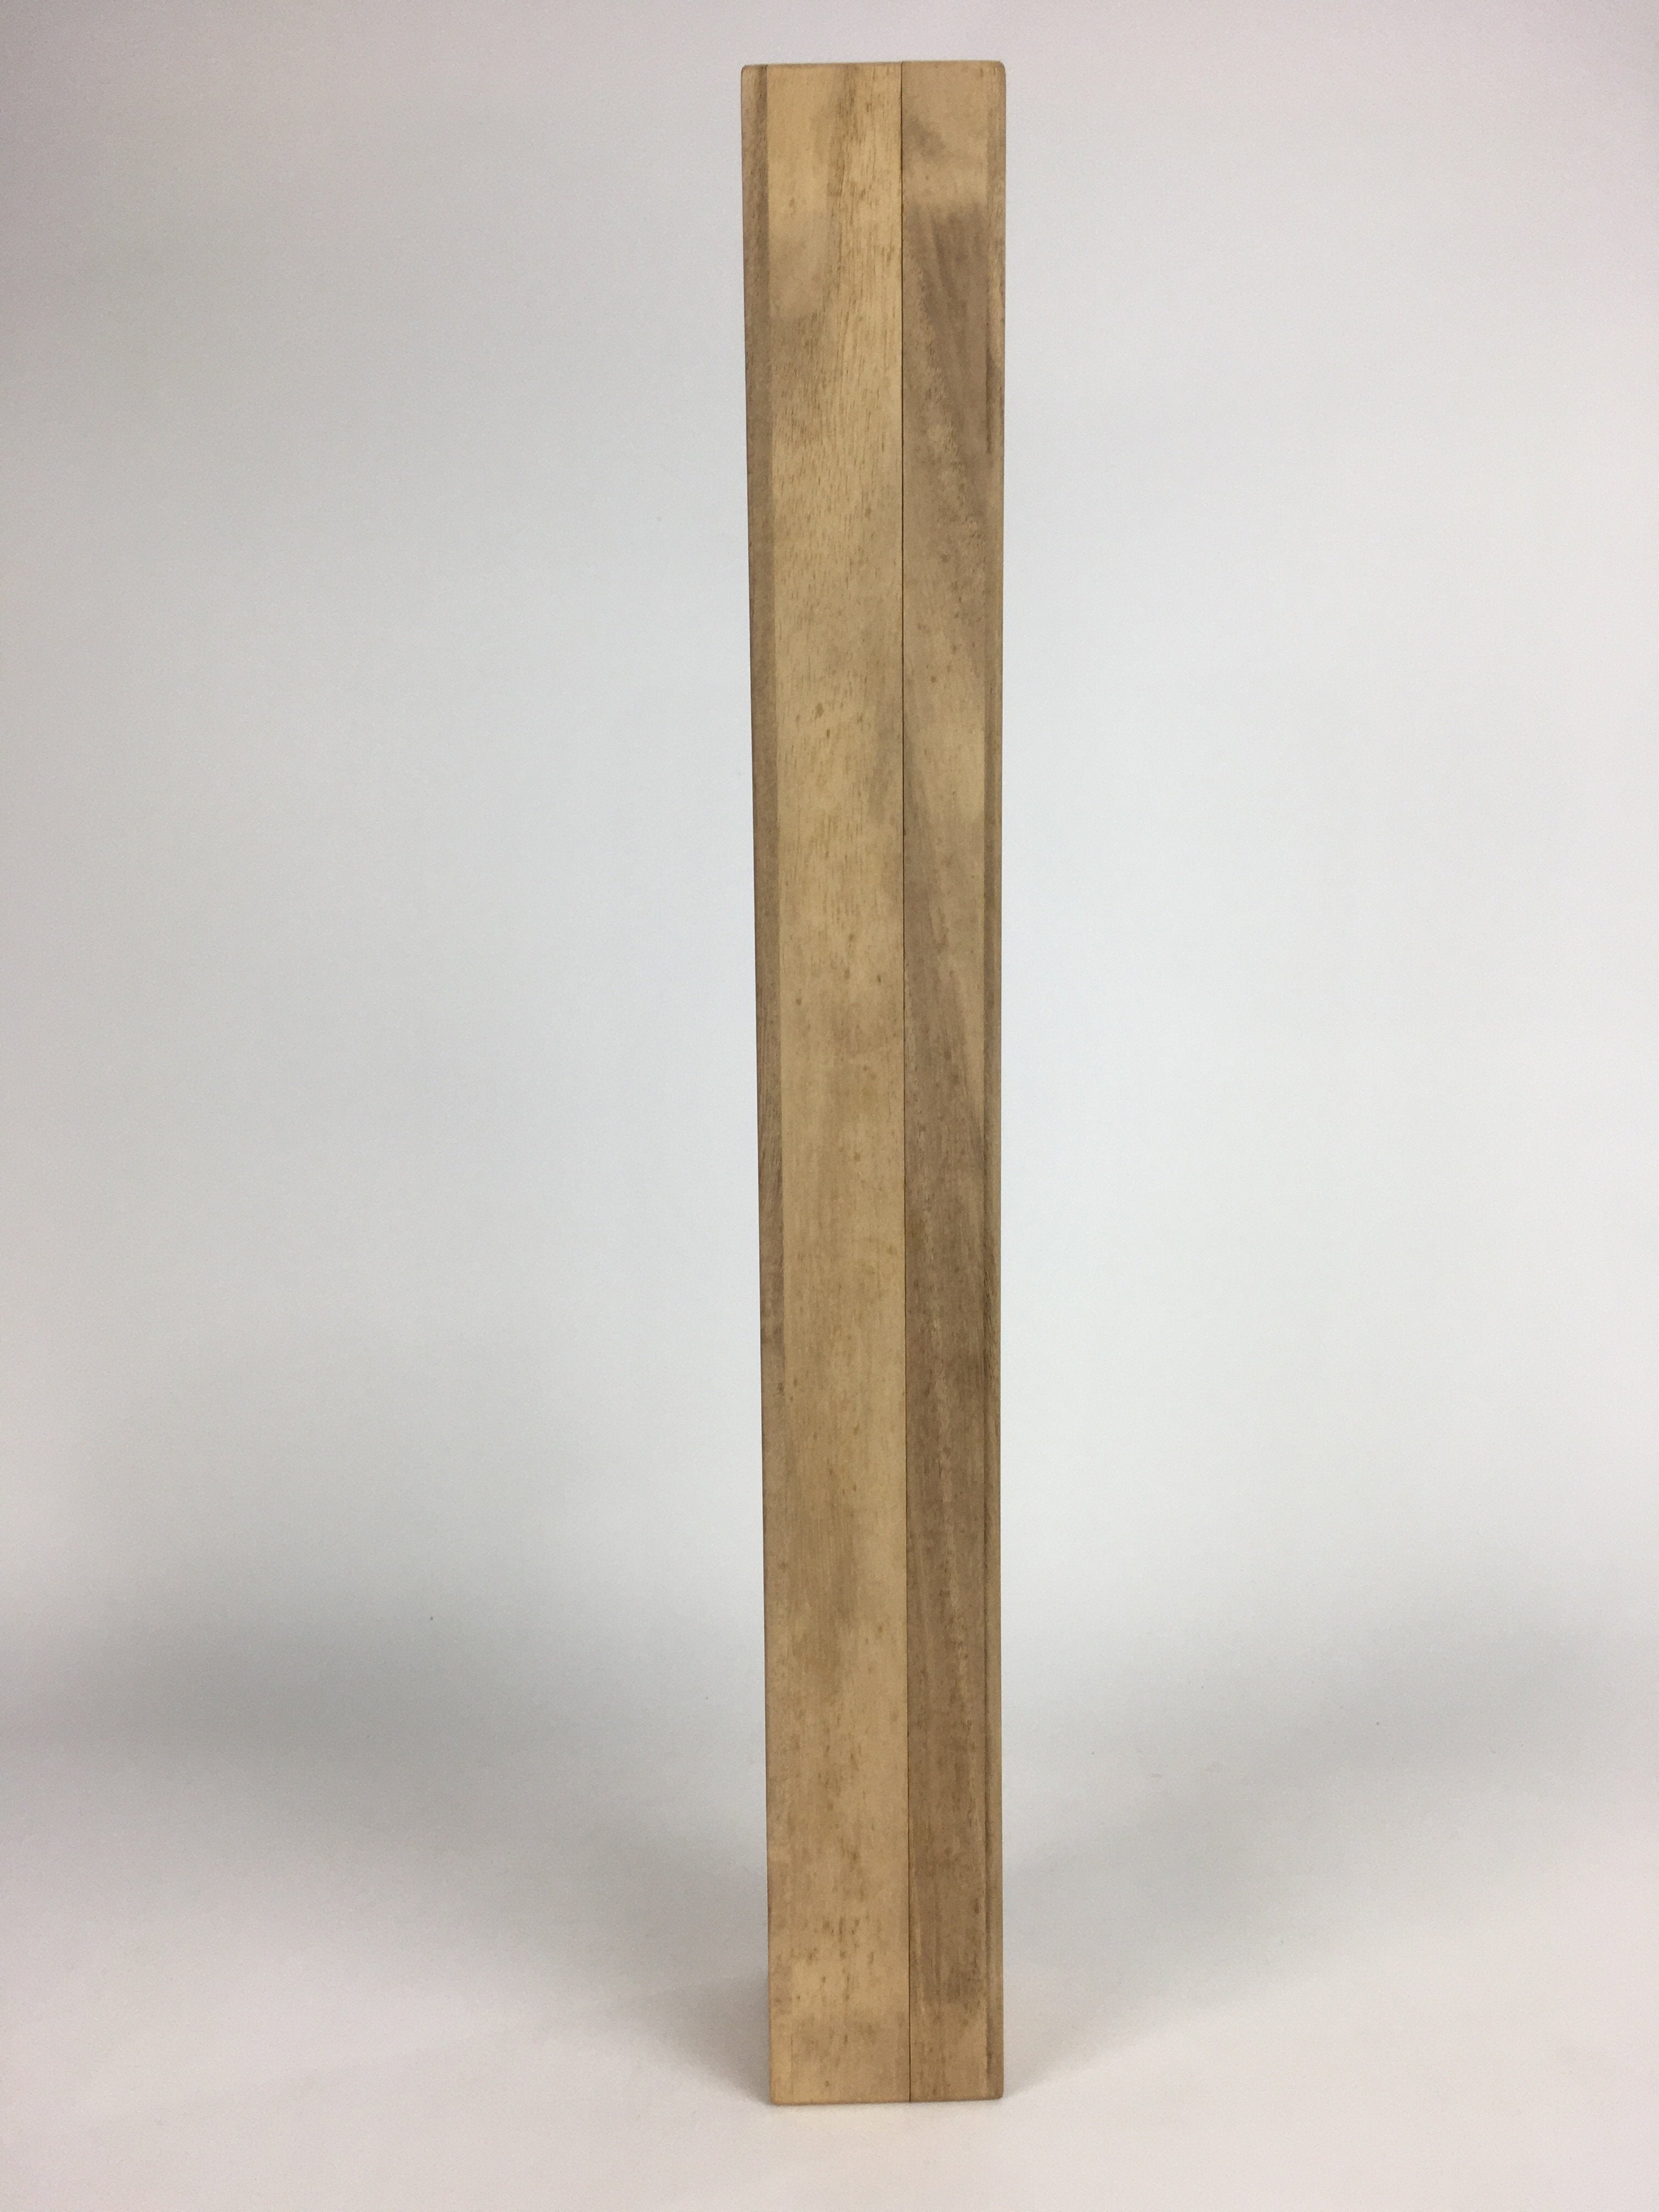 Japanese Wooden Hanging Scroll Box Vtg Kakejiku Hako Inside Length 59 cm SB180